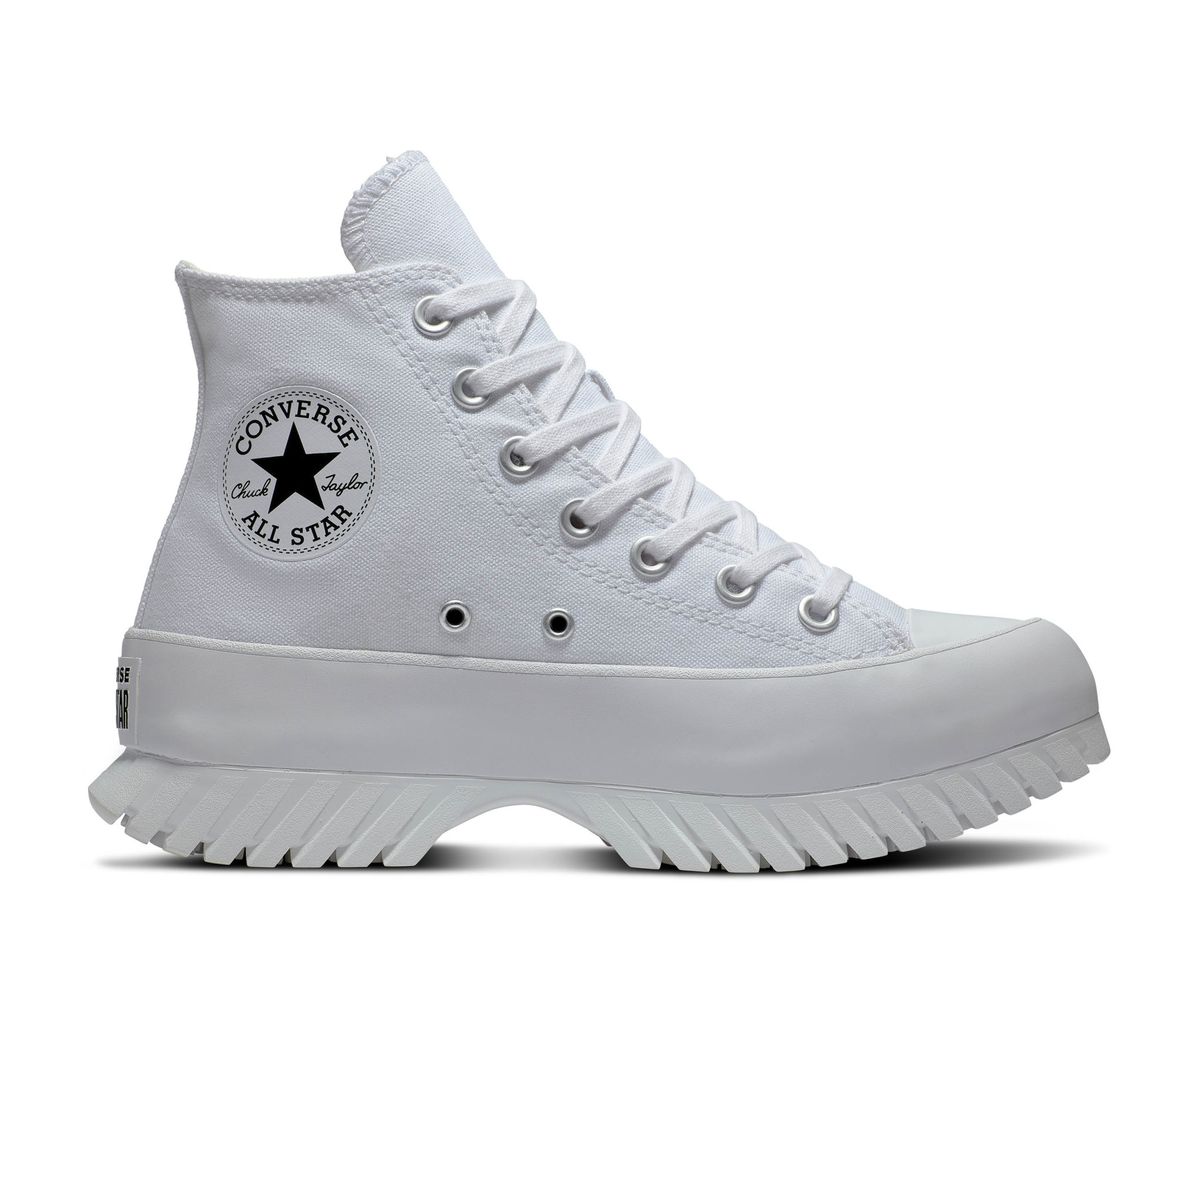 Converse Chuck Taylor All Star Lugged - Hi White/Black/White | Shop ...